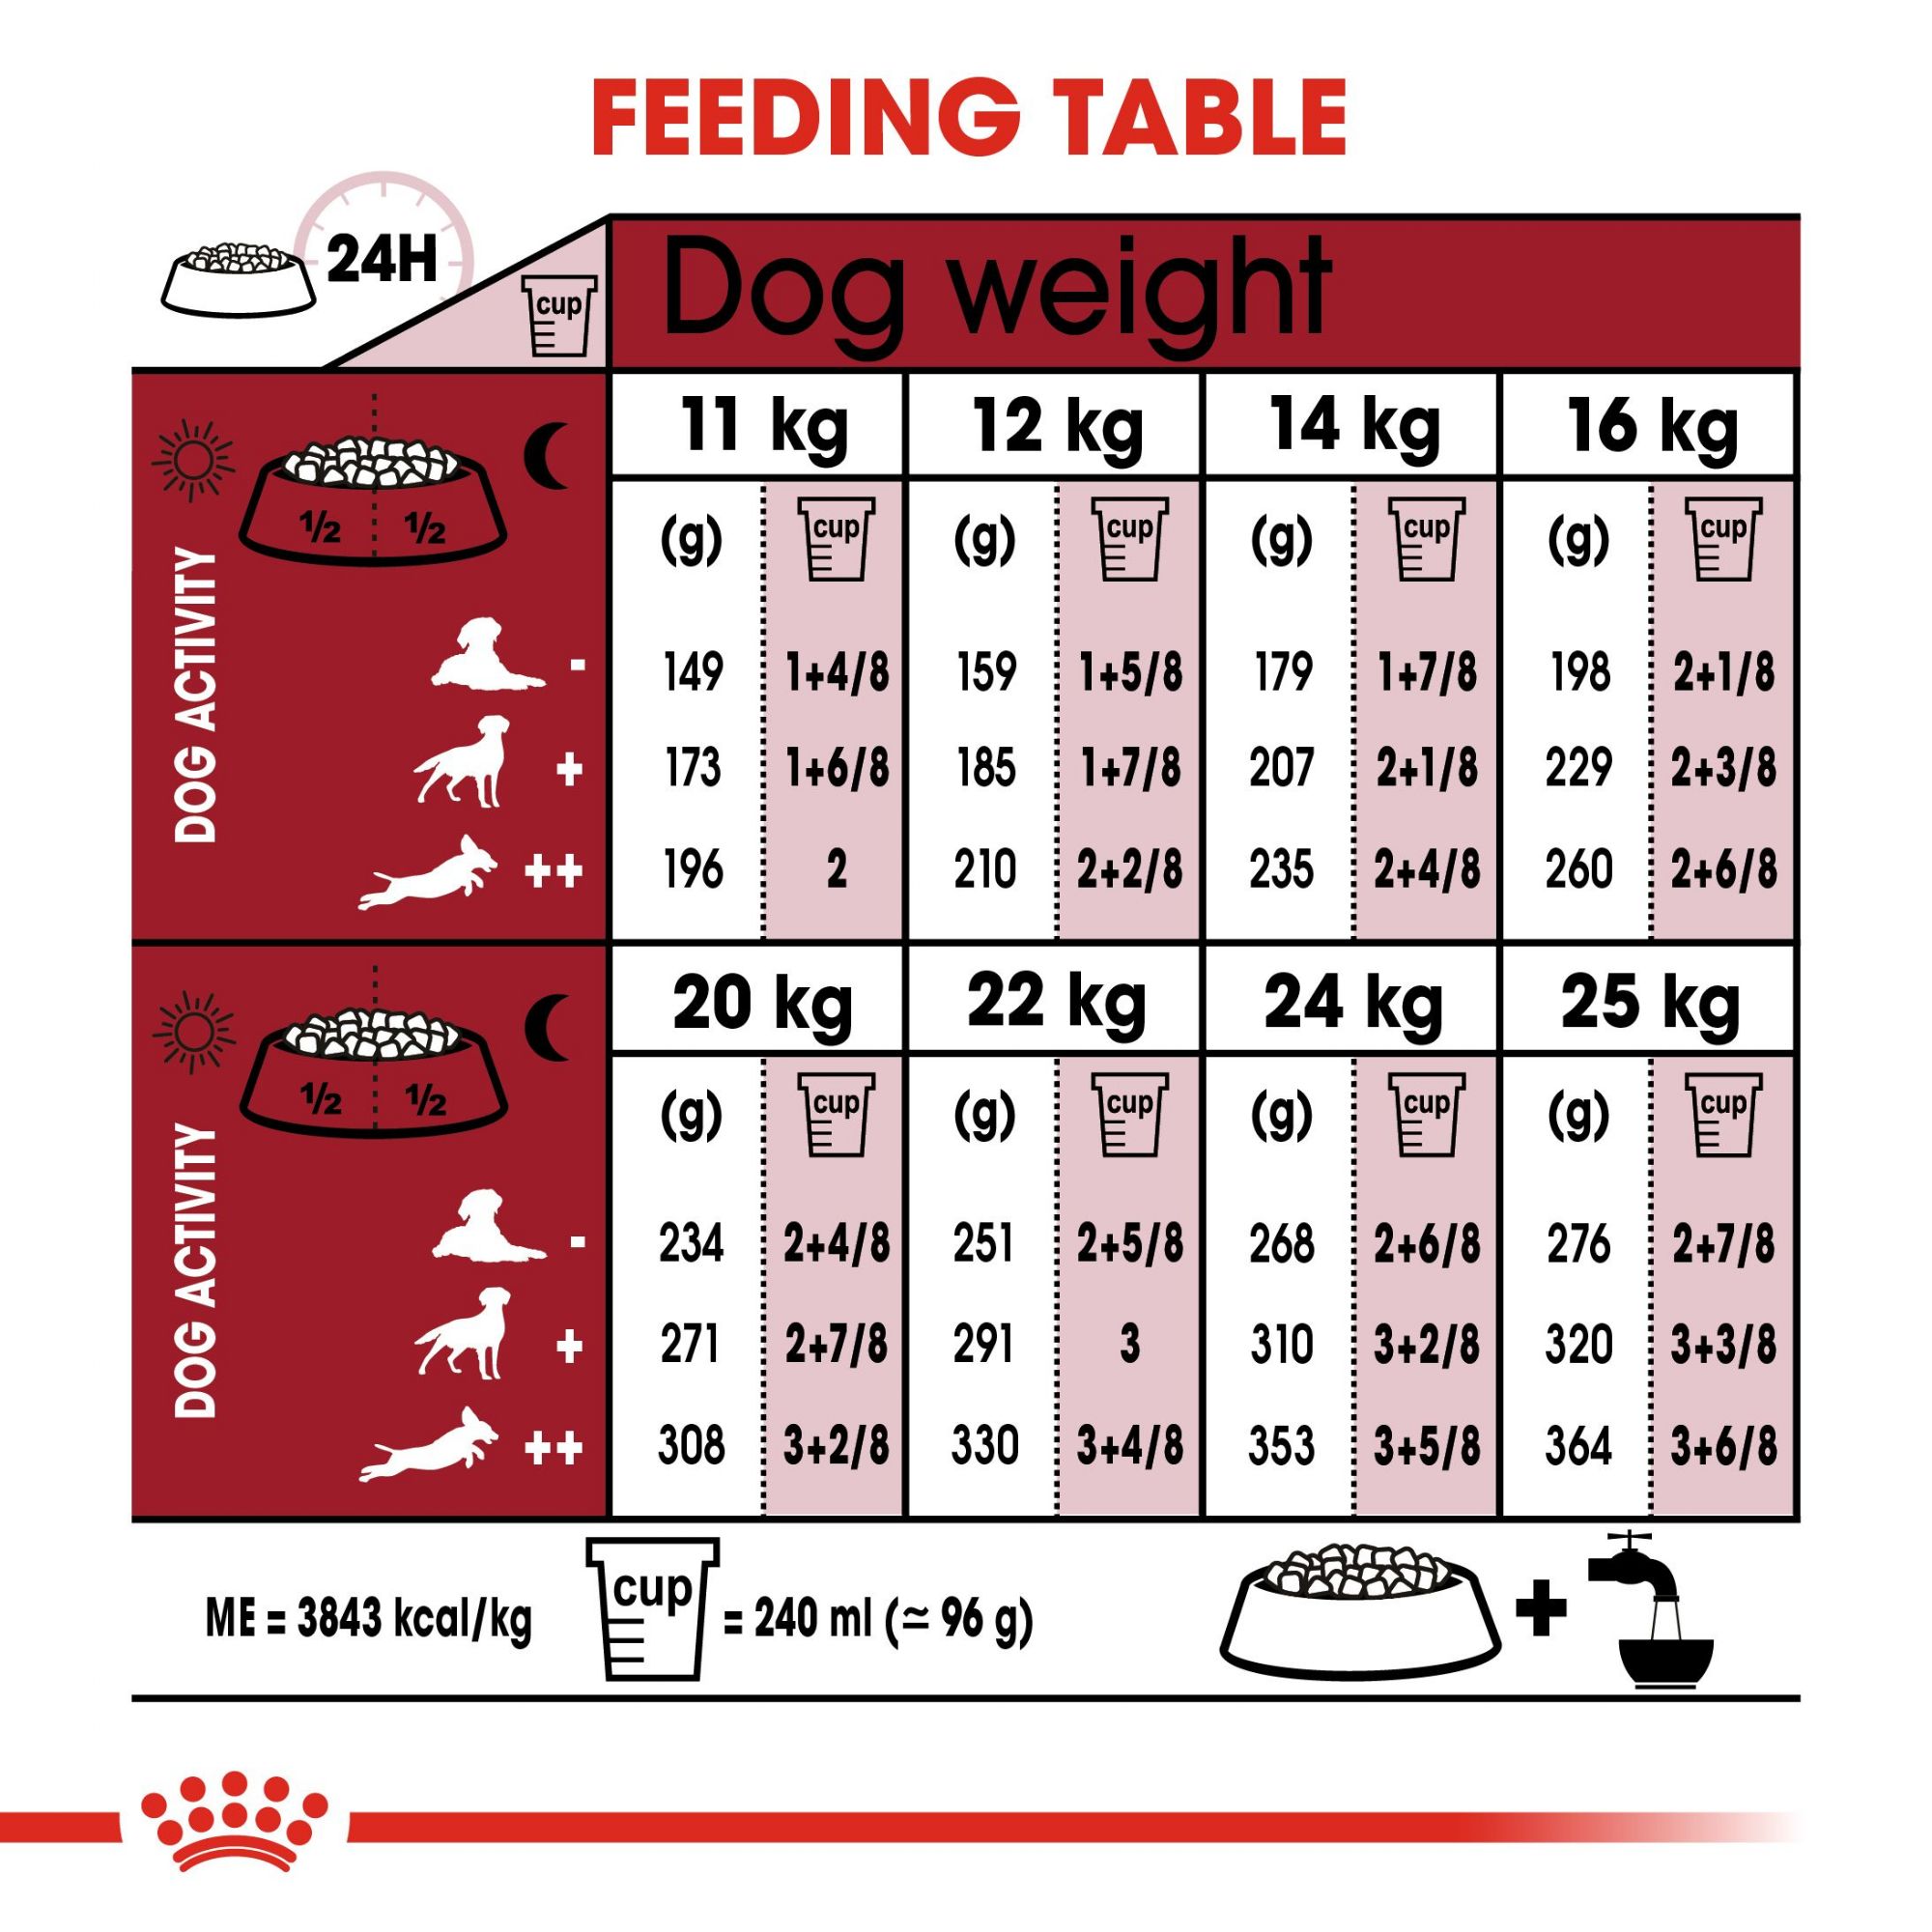 Royal Canin Dog Food Feeding Chart